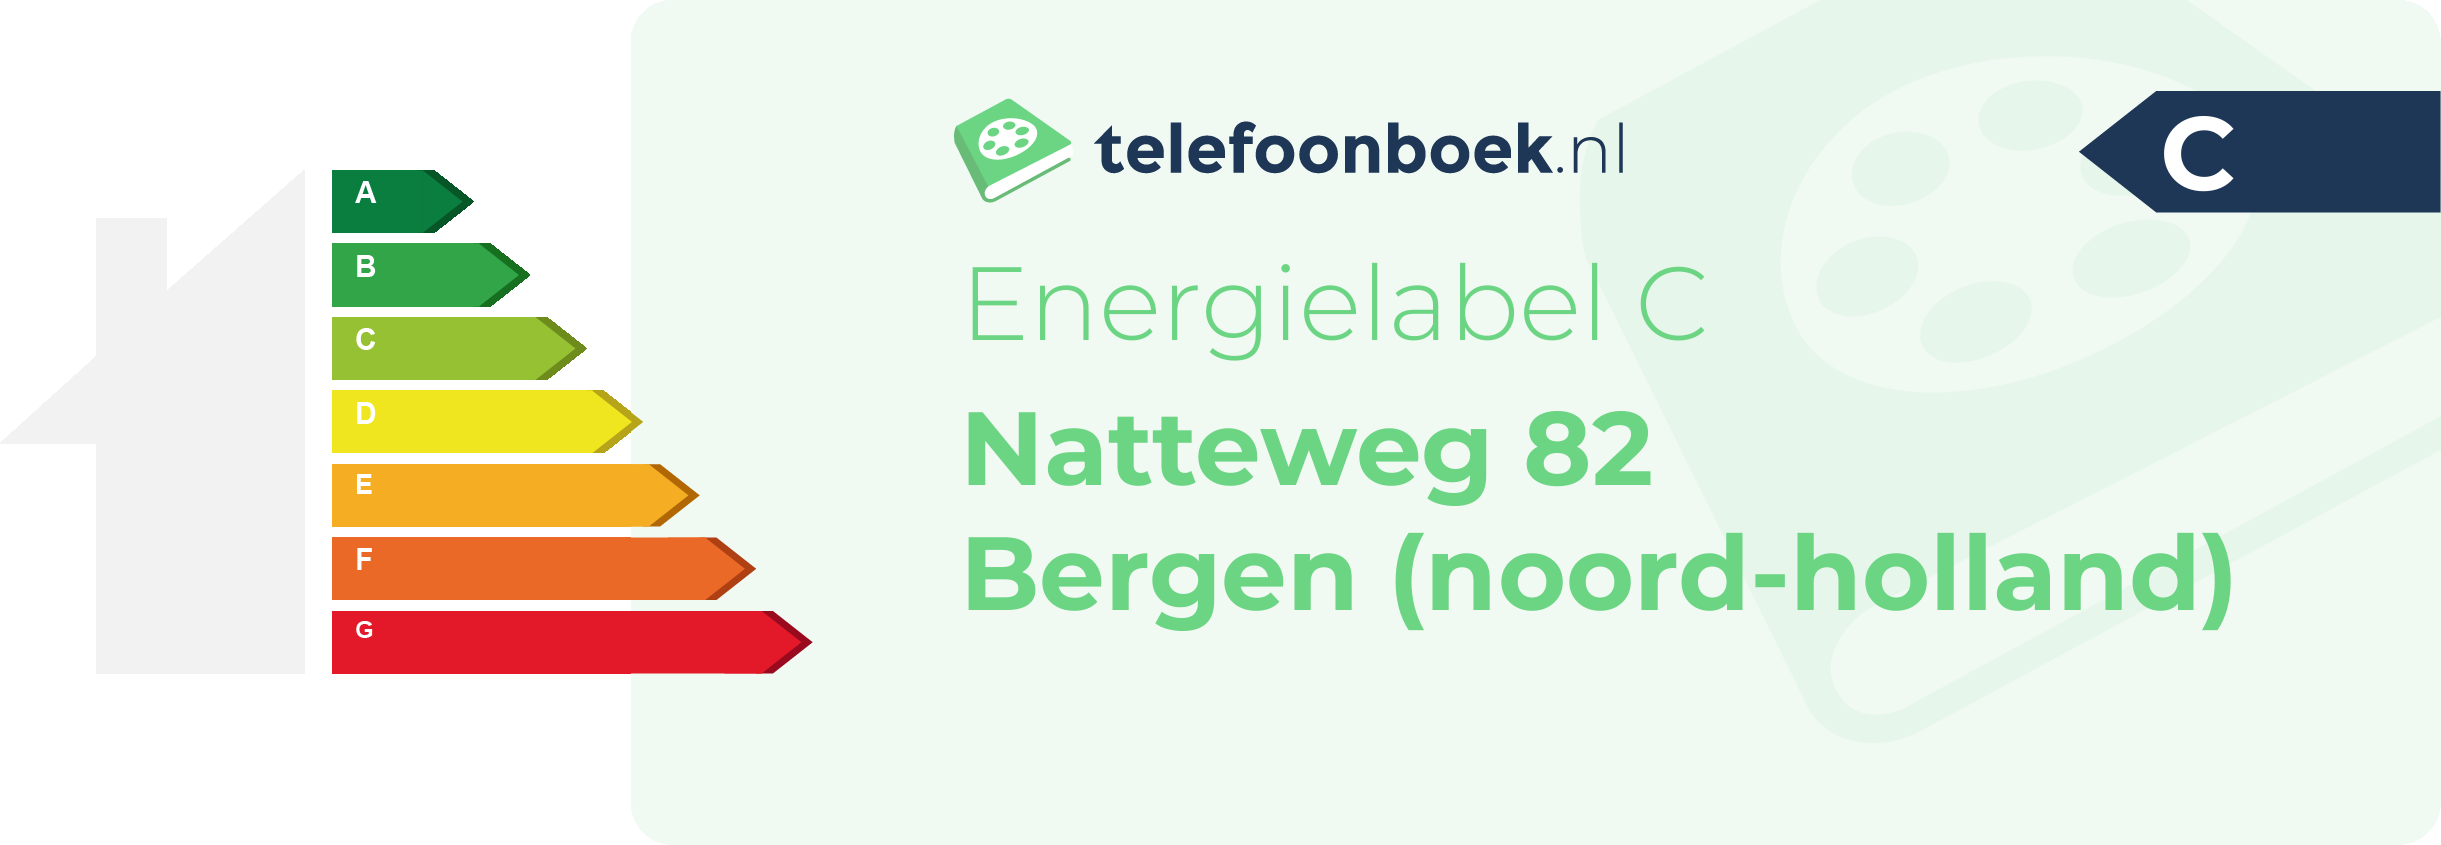 Energielabel Natteweg 82 Bergen (Noord-Holland)